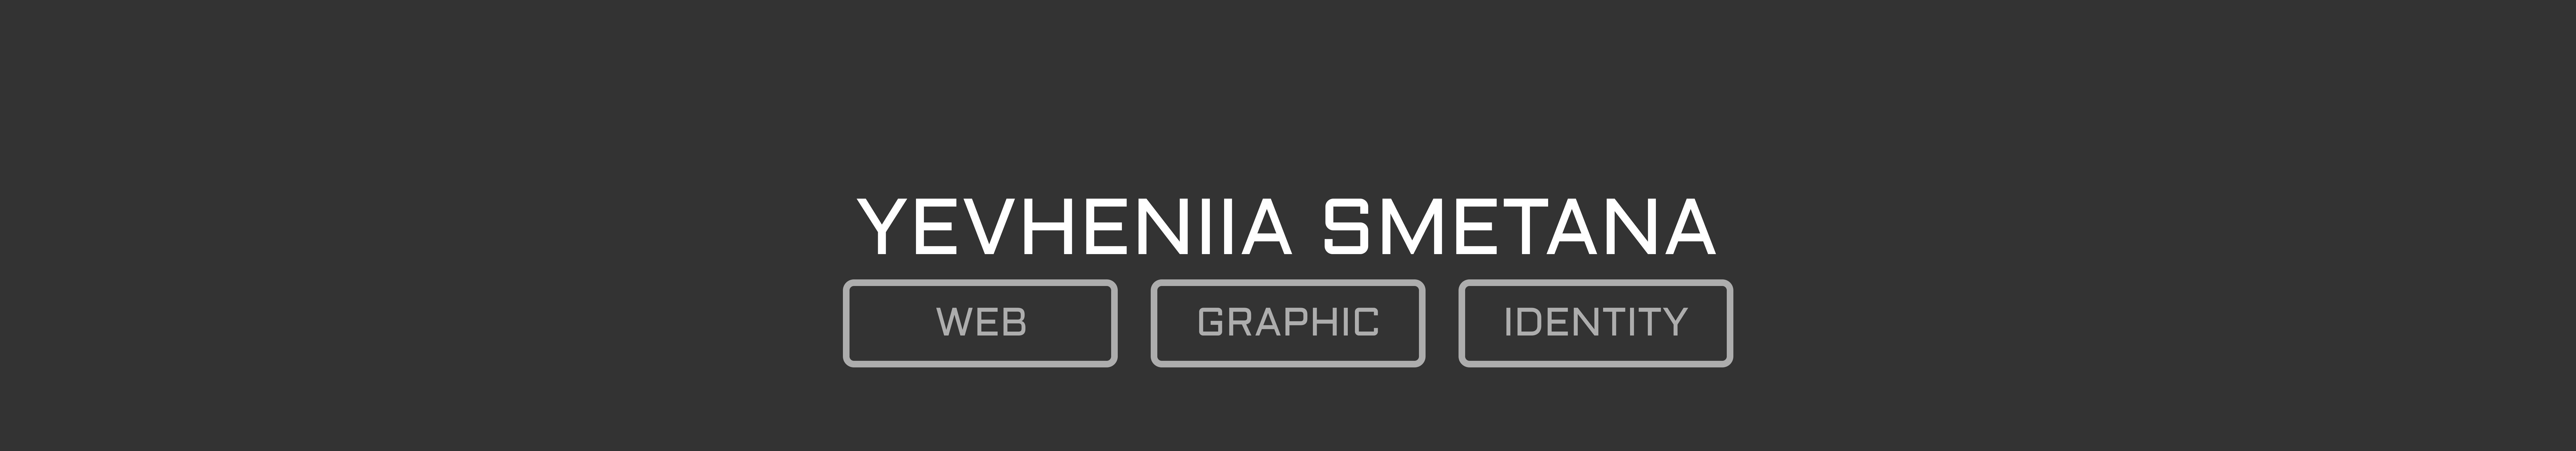 Banner de perfil de Yevheniia Smetana